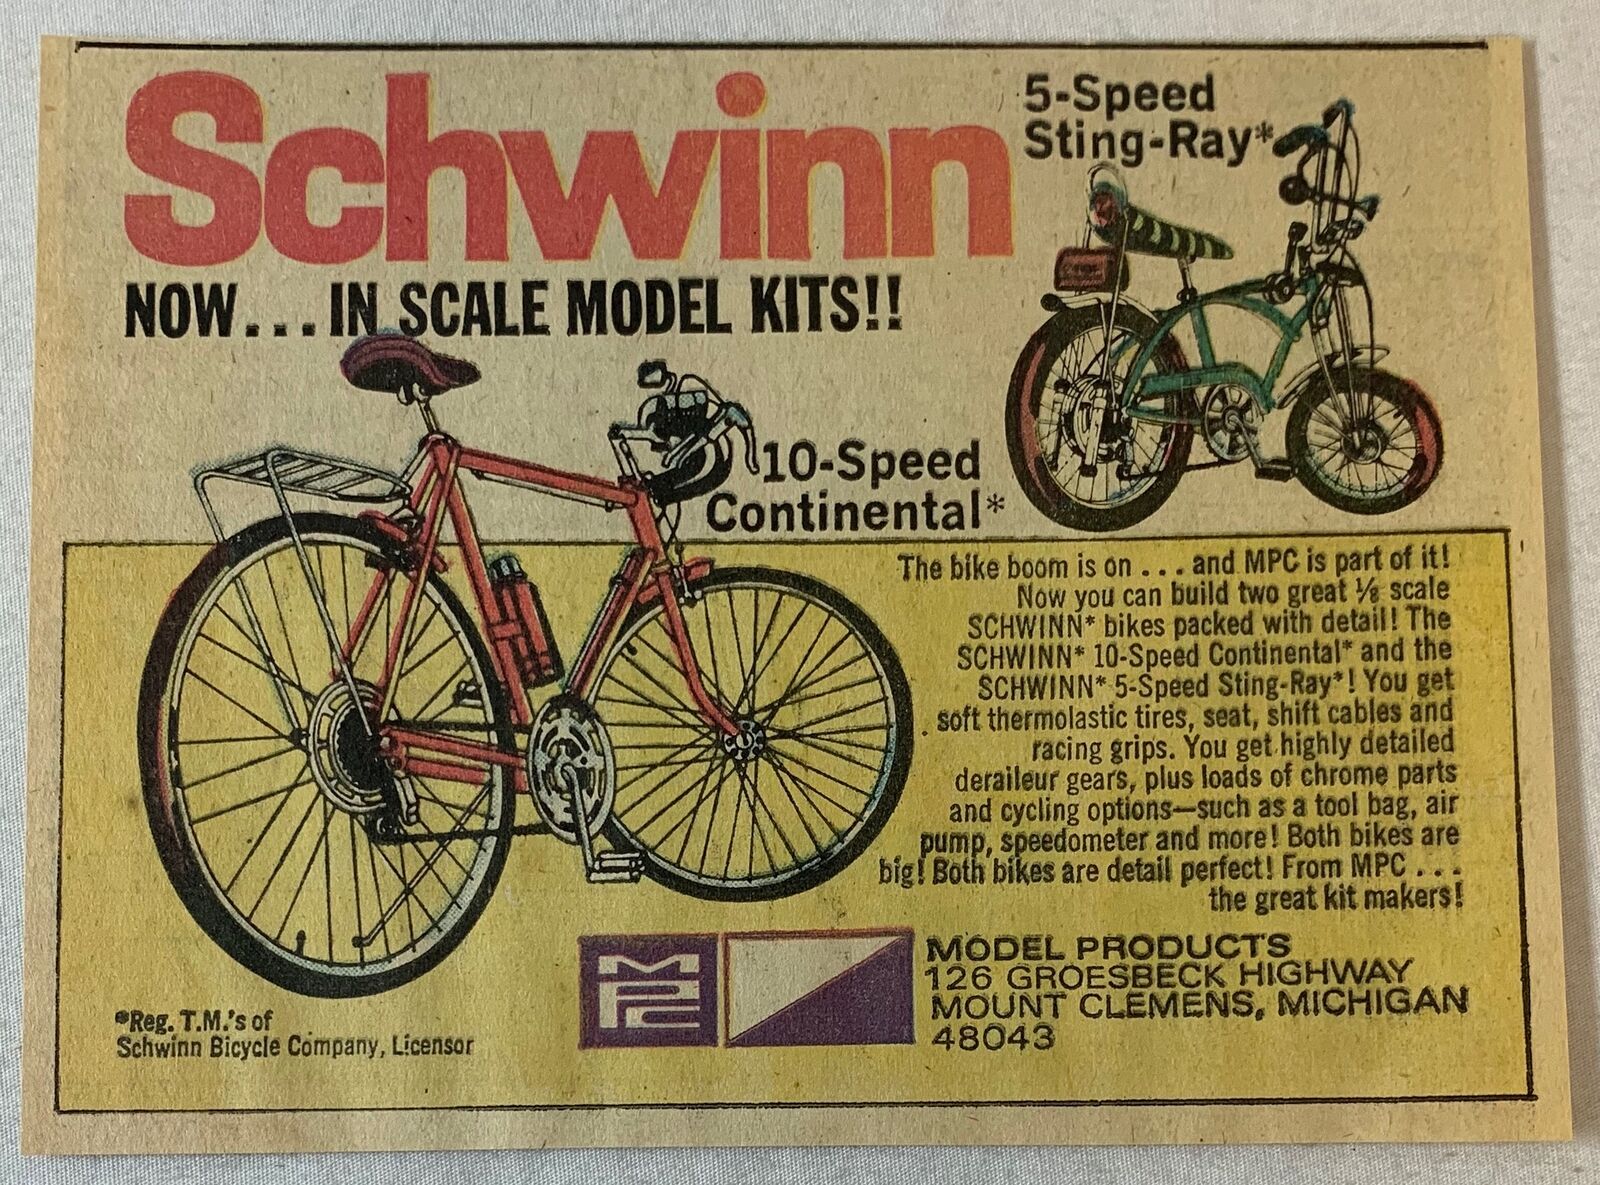 1973 MPC model kits cartoon ad ~ SCHWINN BICYCLES Sting-Ray, Continental